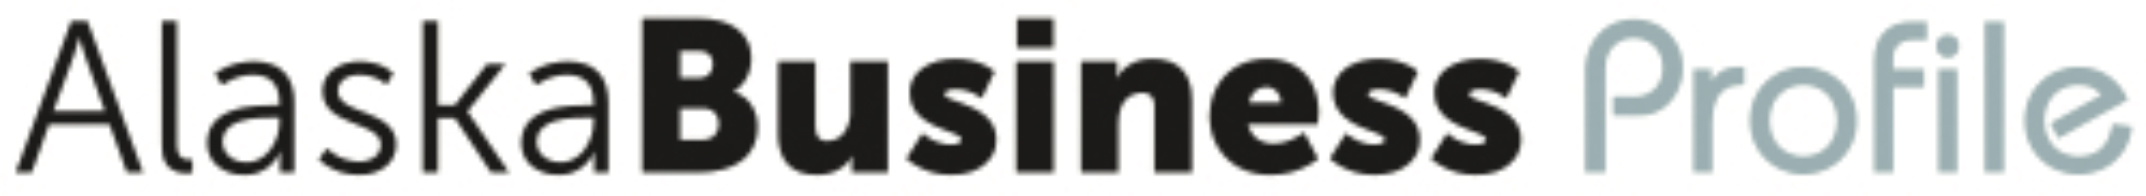 Alaska Business Profile logo